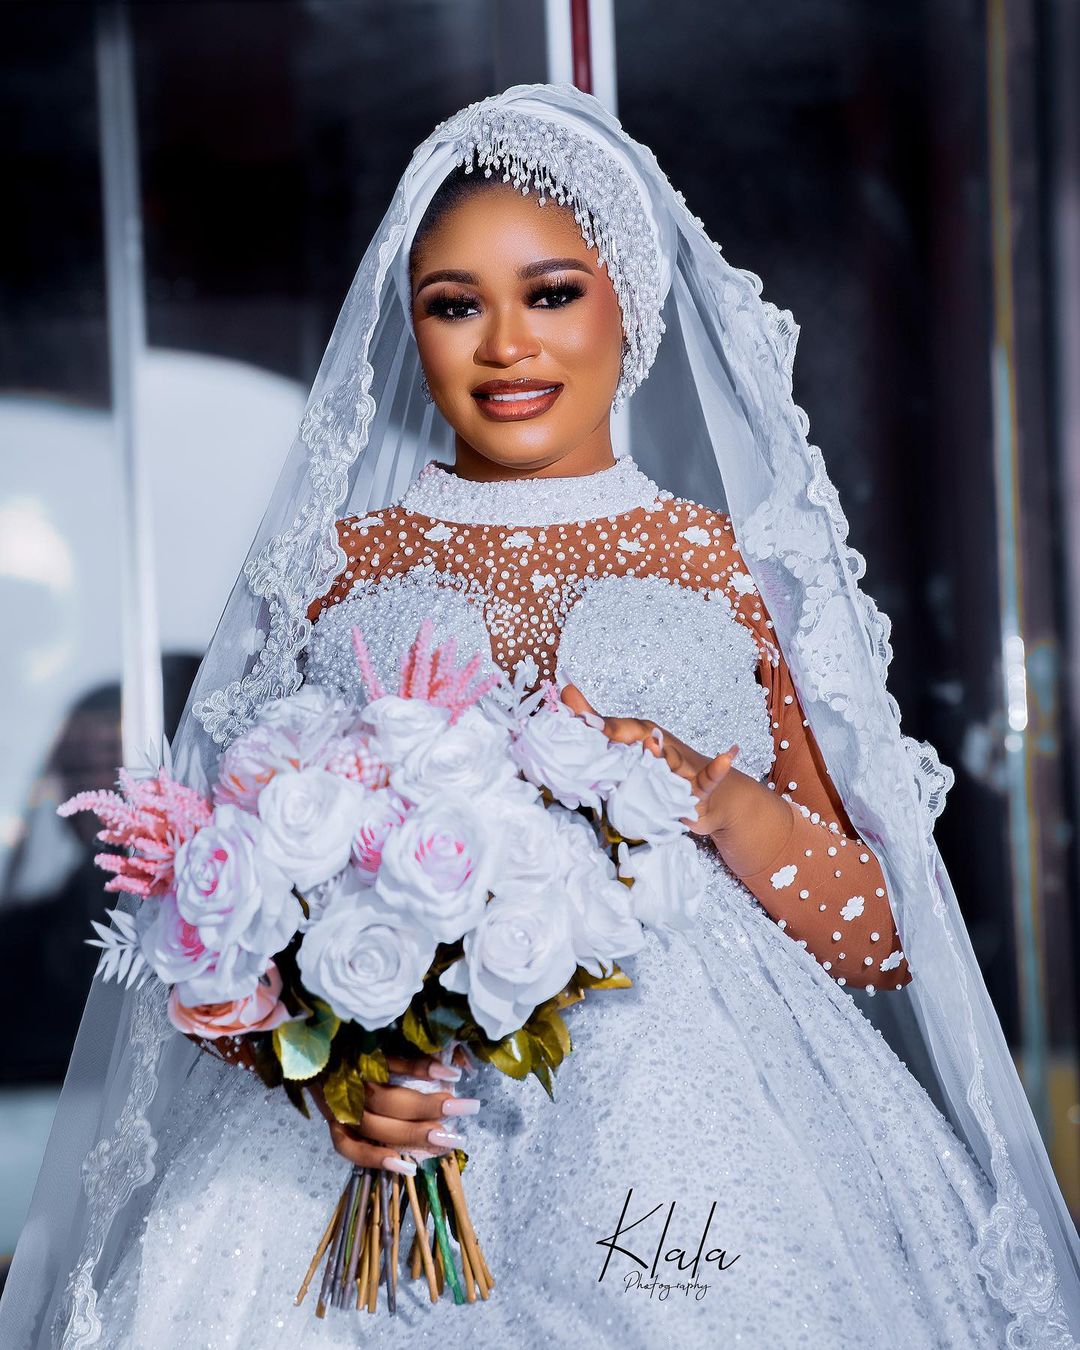  Bridal Inspiration For Muslimah Brides